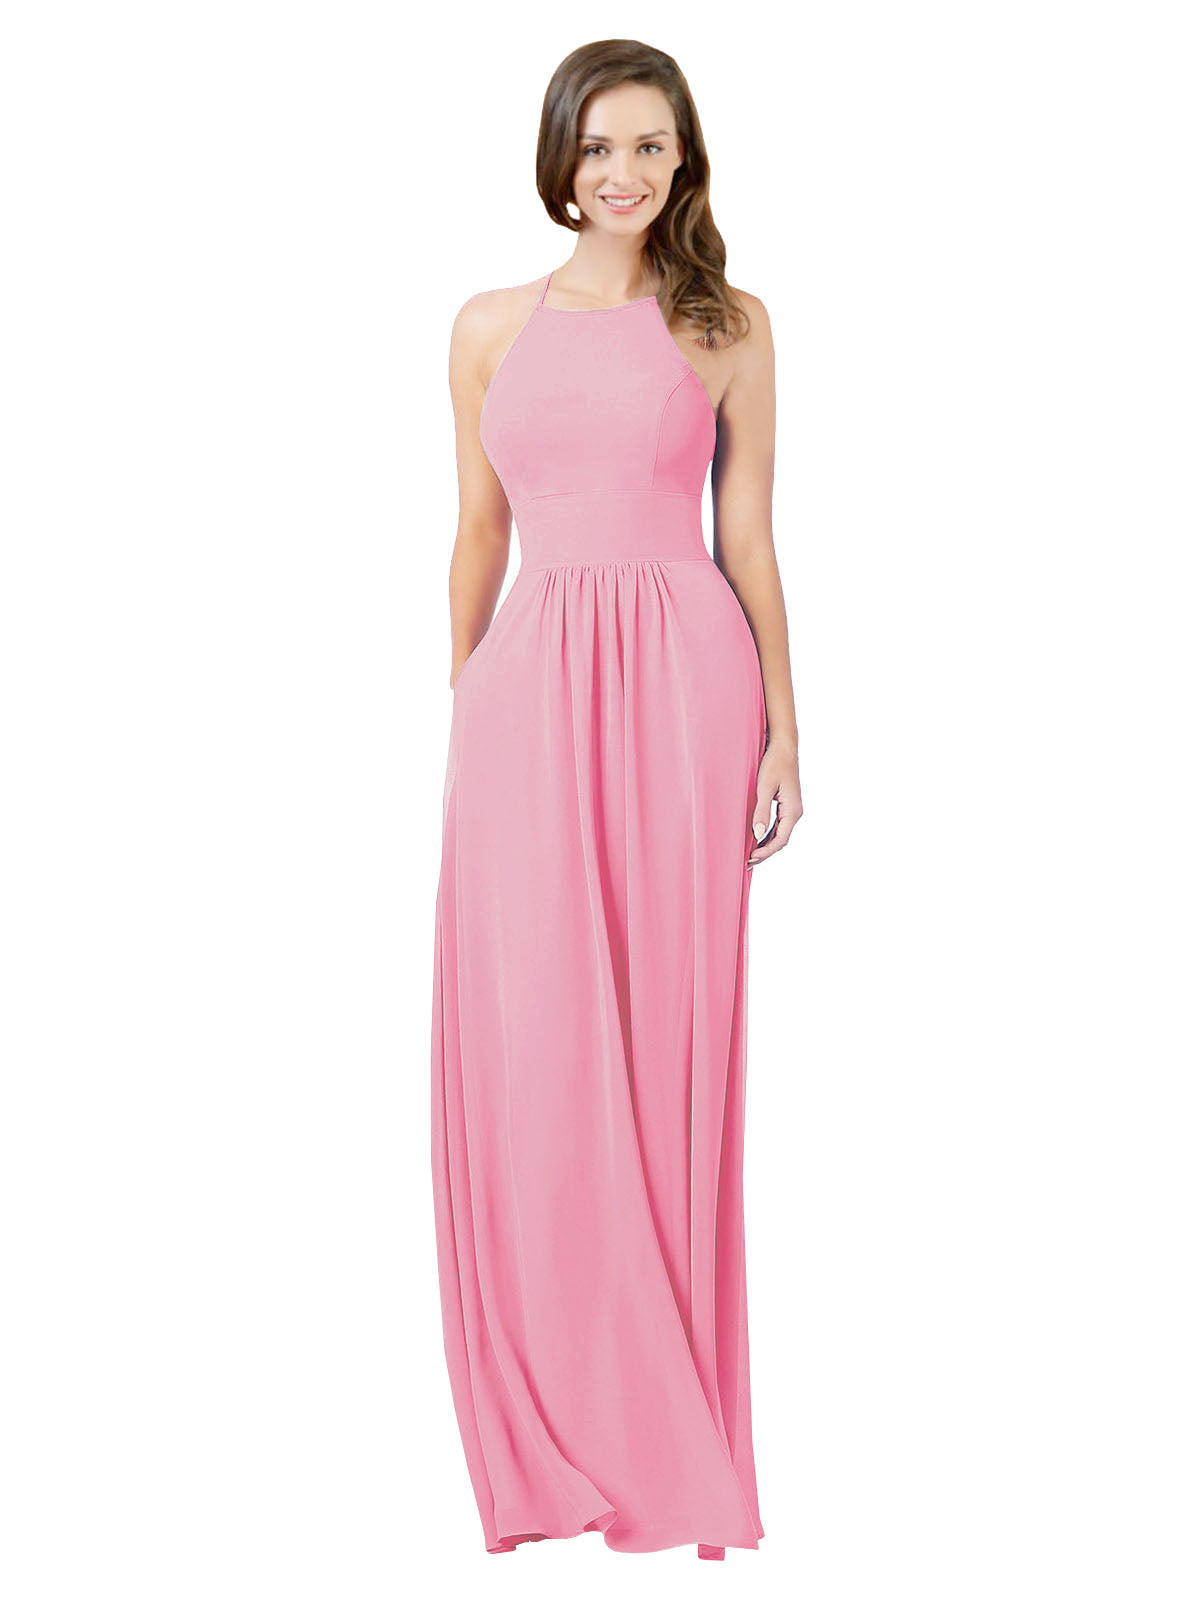 Hot Pink A-Line Halter Sleeveless Long Bridesmaid Dress Cindy